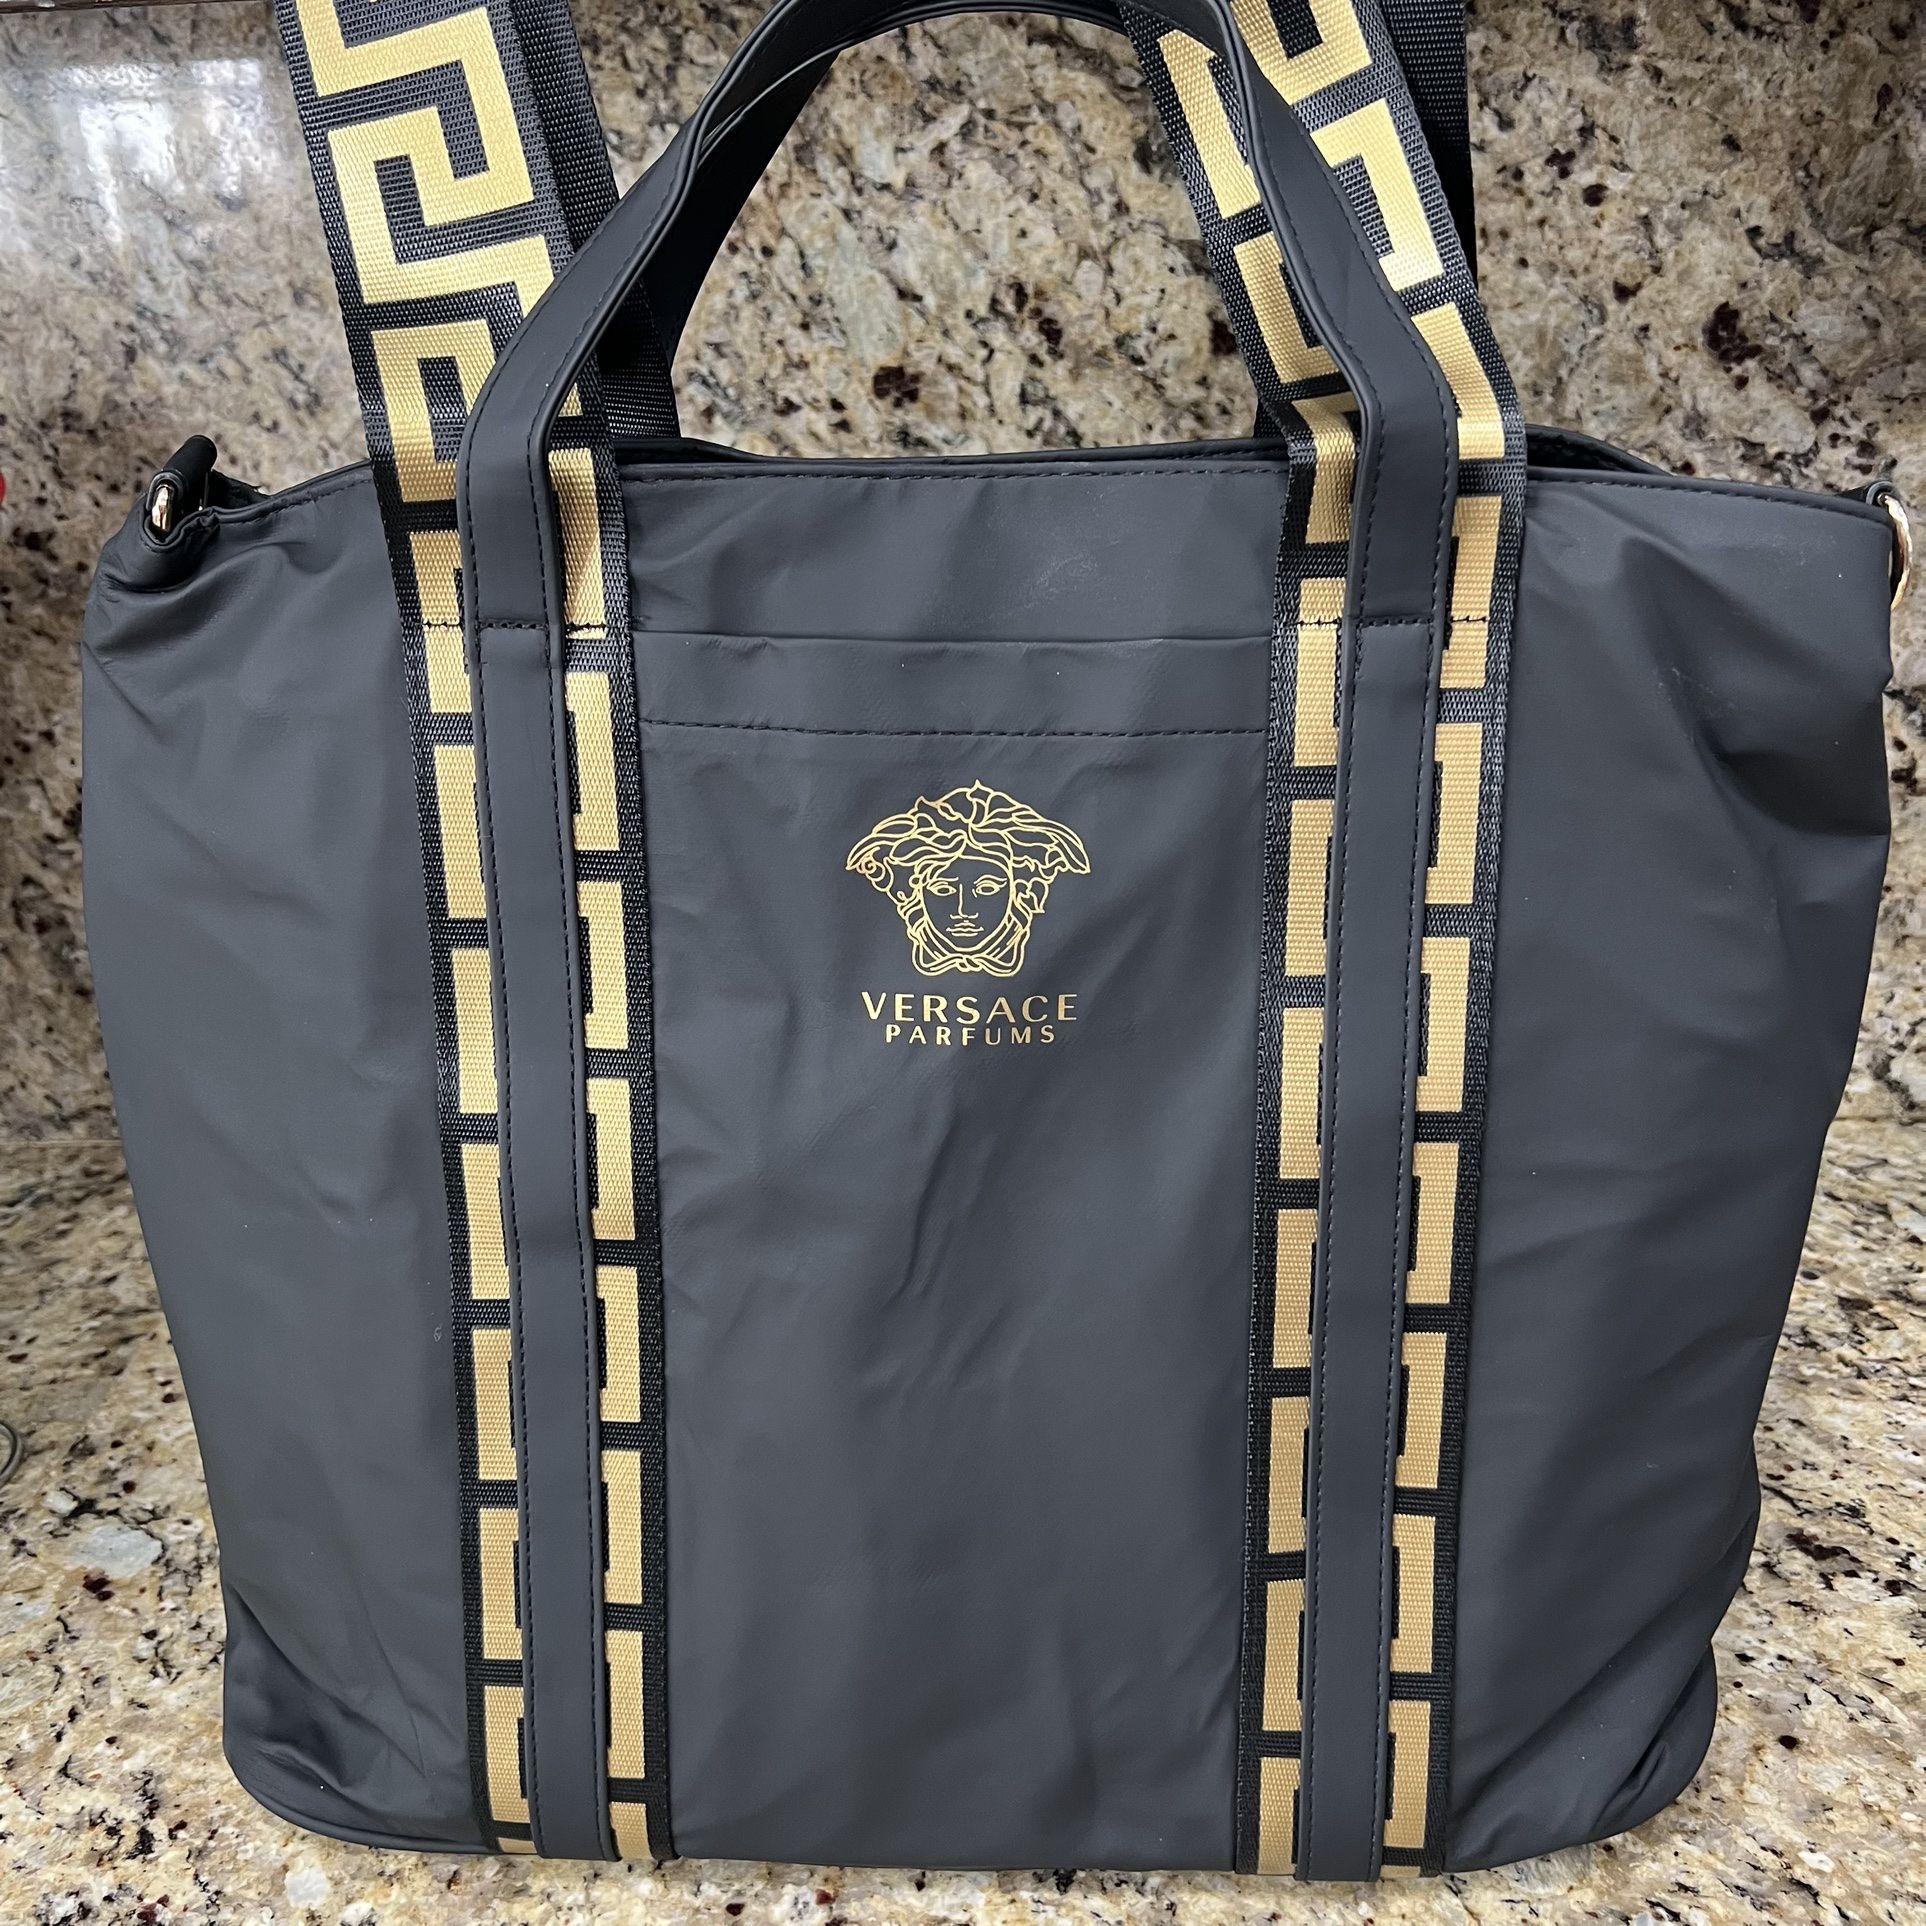 Versace Sport Bag/ Tote/ Shoulder Bag for Sale in Palmdale, CA - OfferUp